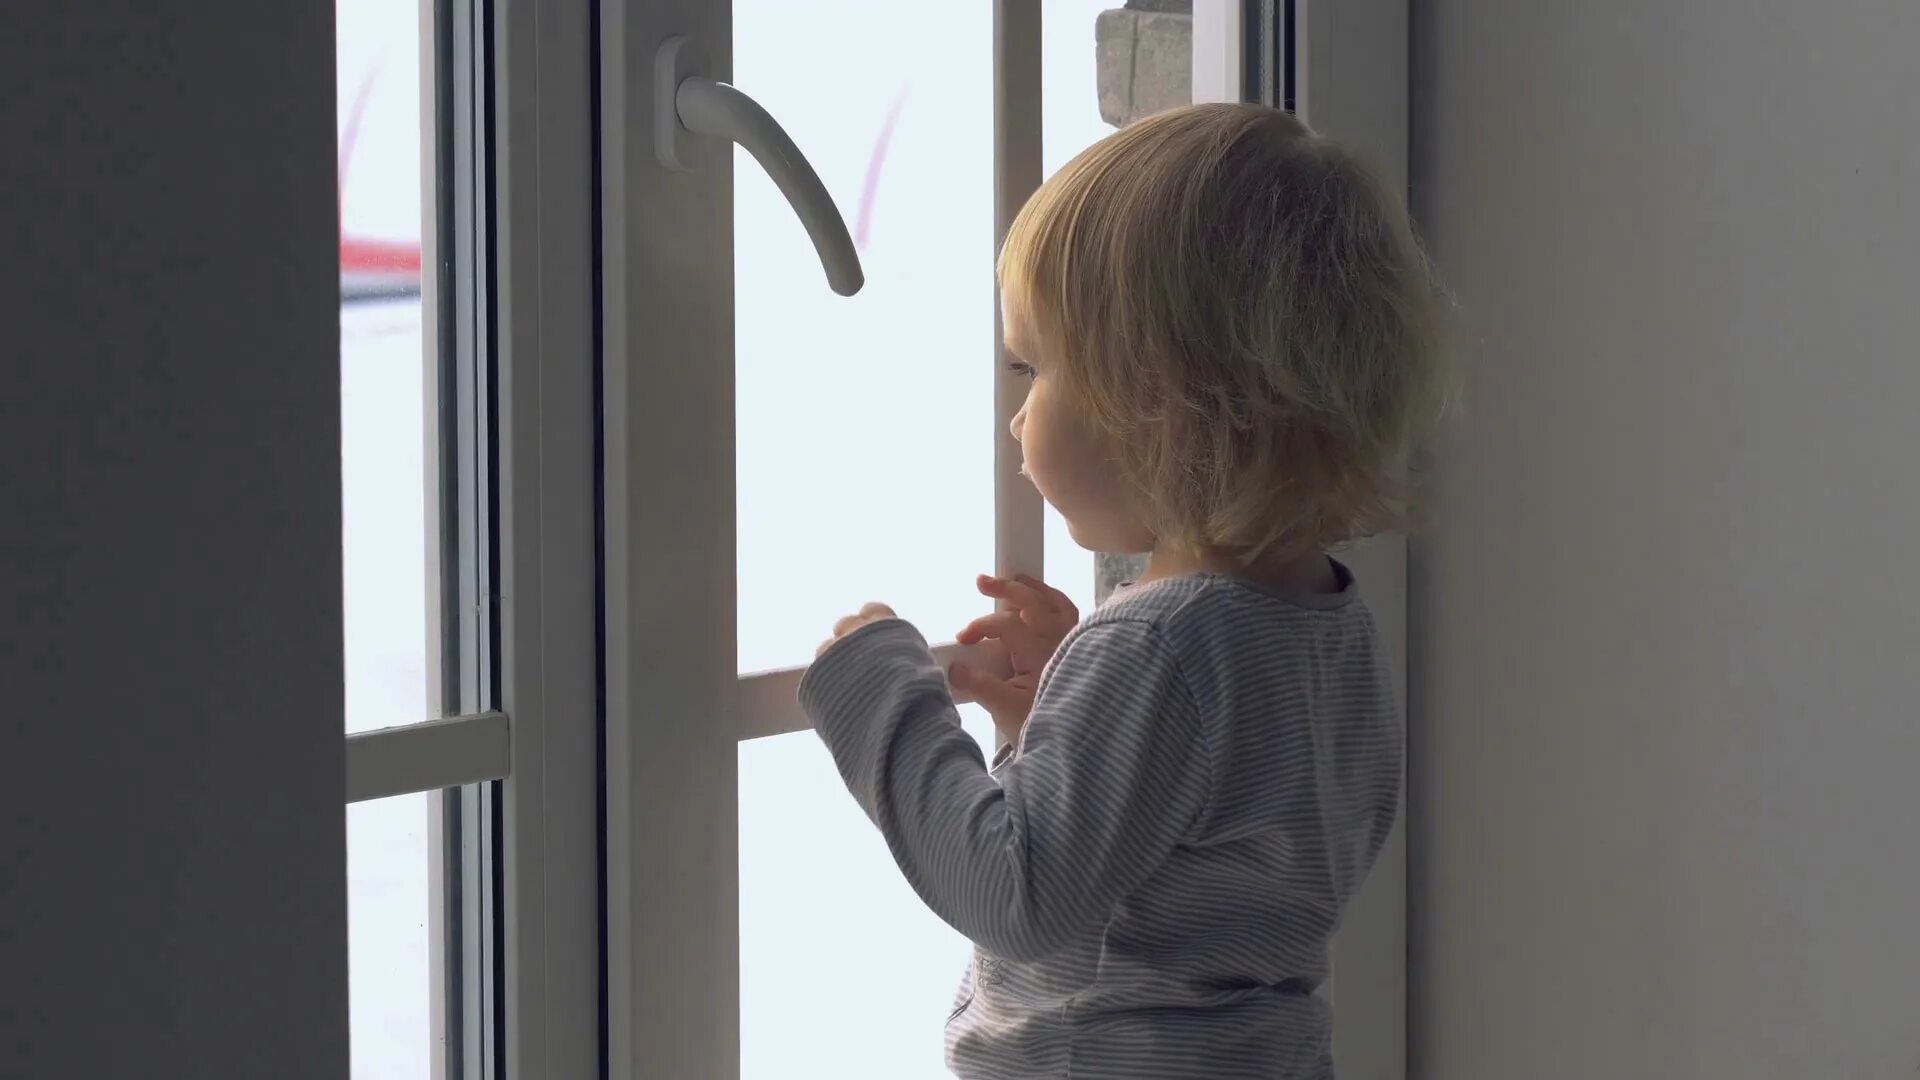 Ребенок у окна. Мальчик у окна. Ребенок окно москитная сетка. Малыш у окна.